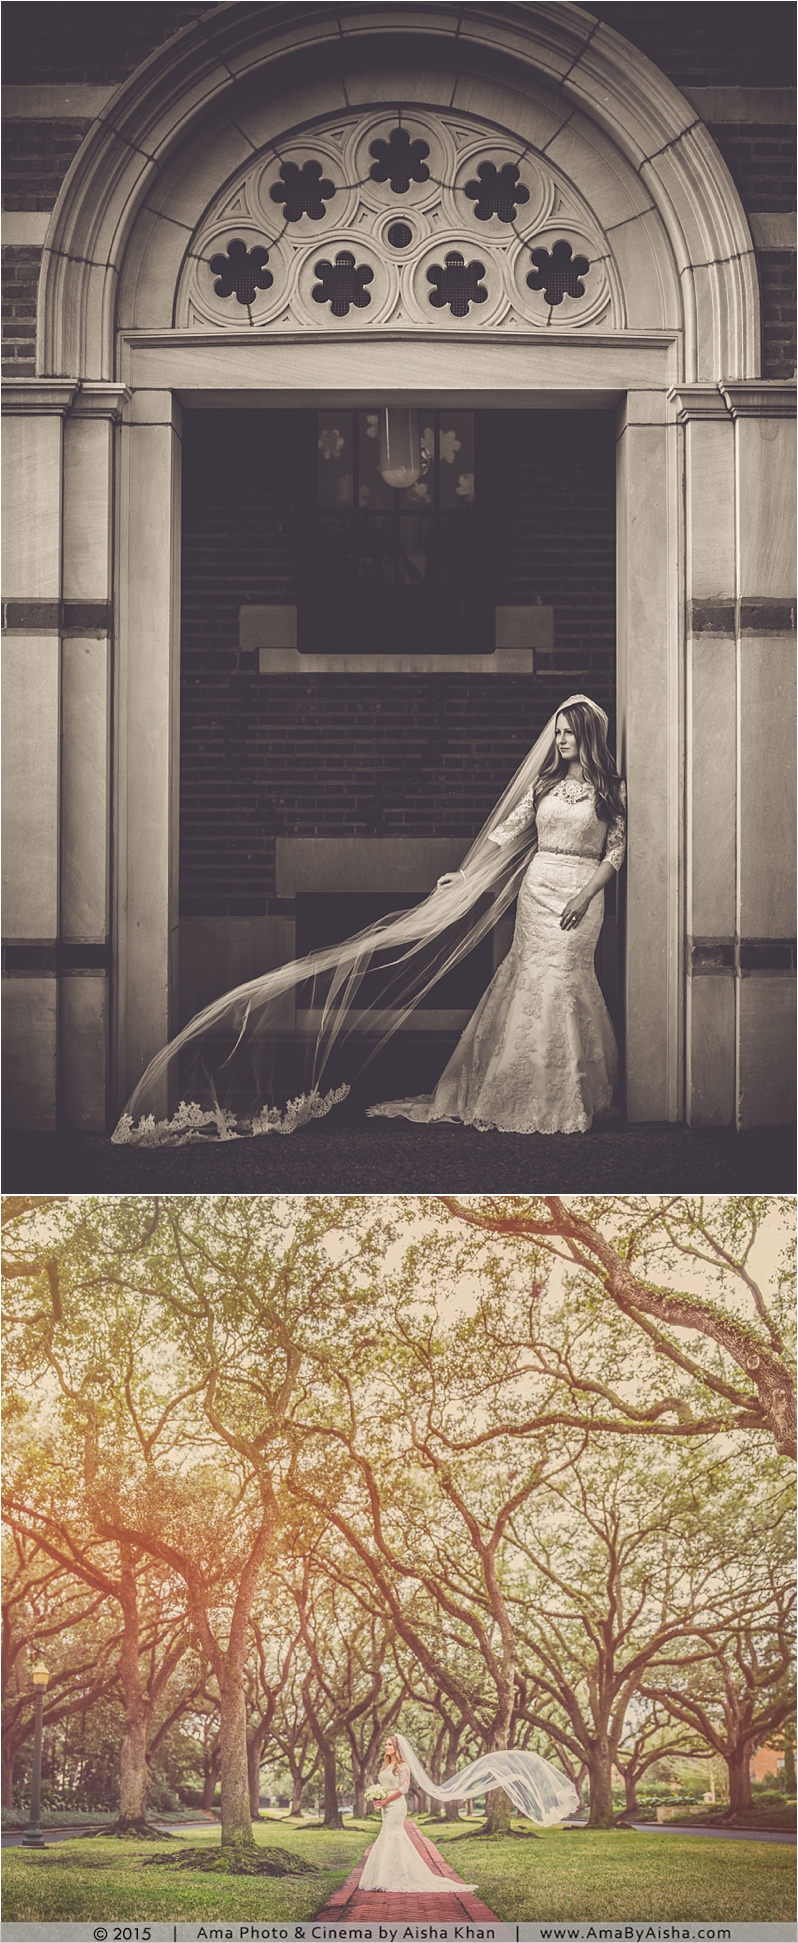 ©2015 | www.AmaByAisha.com | Houston Bridal Portrait